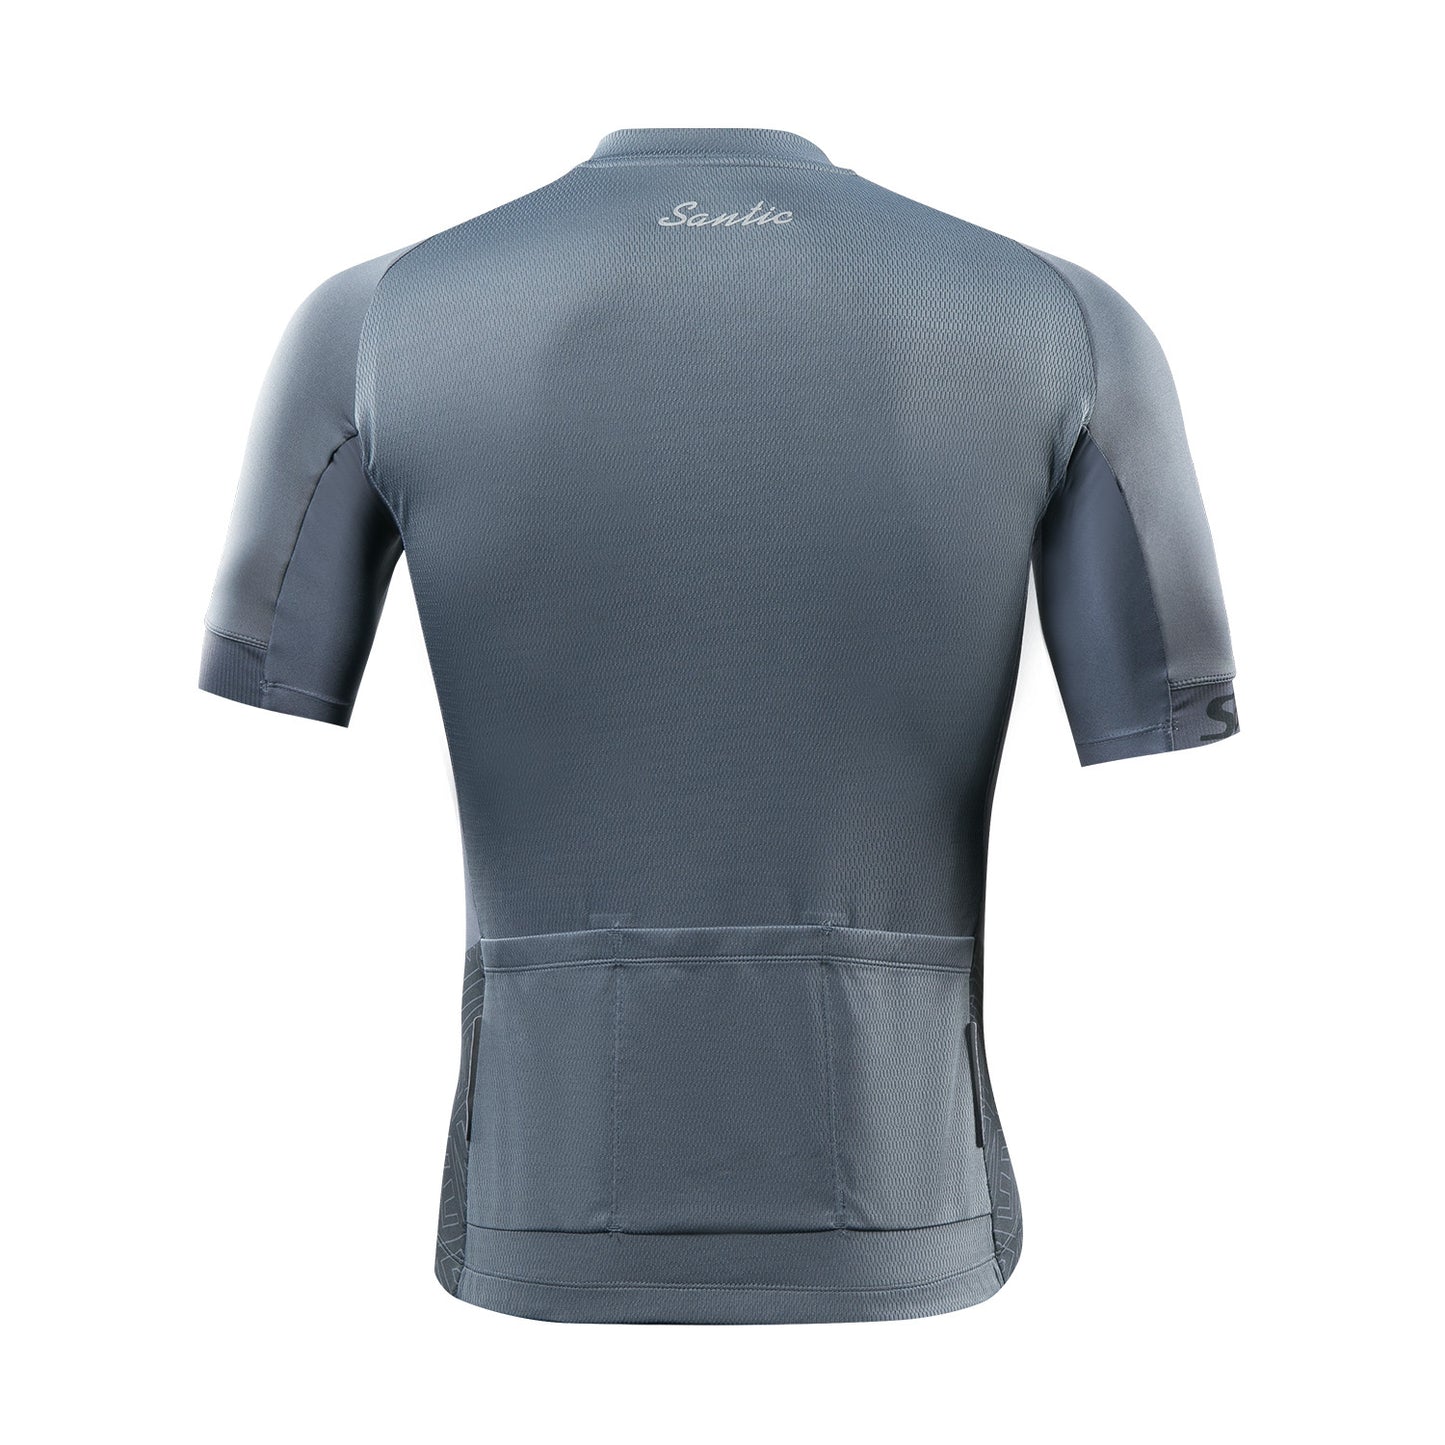 Santic Yorkson Grey Men Cycling Jersey Short Sleeve